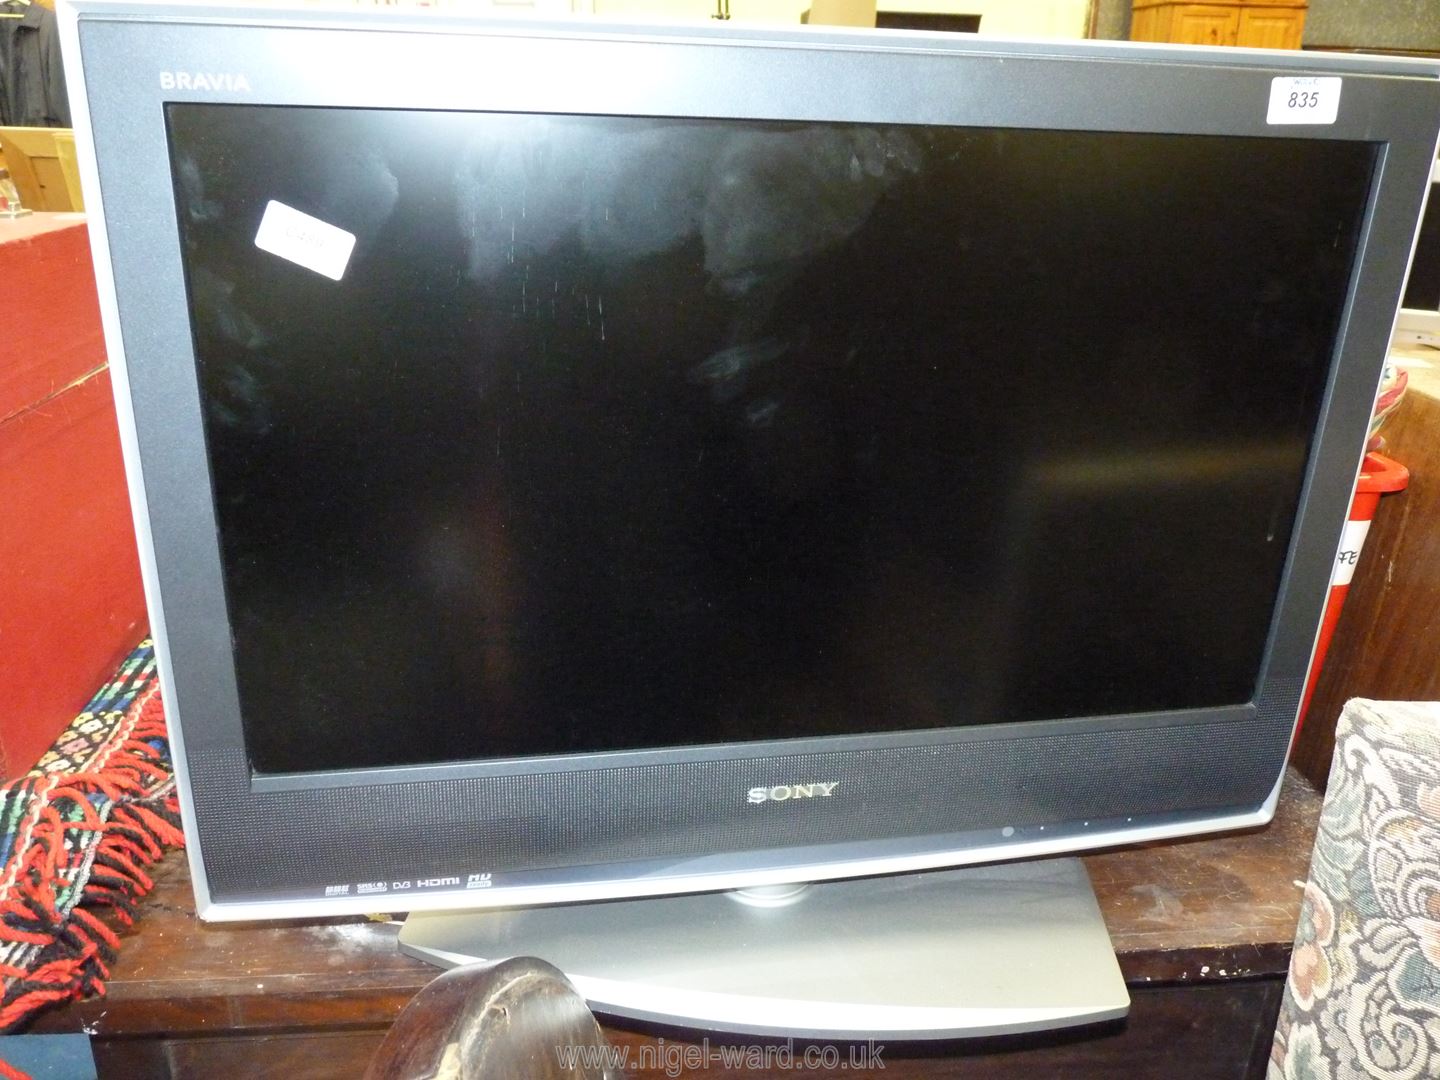 A Sony Bravia LCD TV 26" screen.